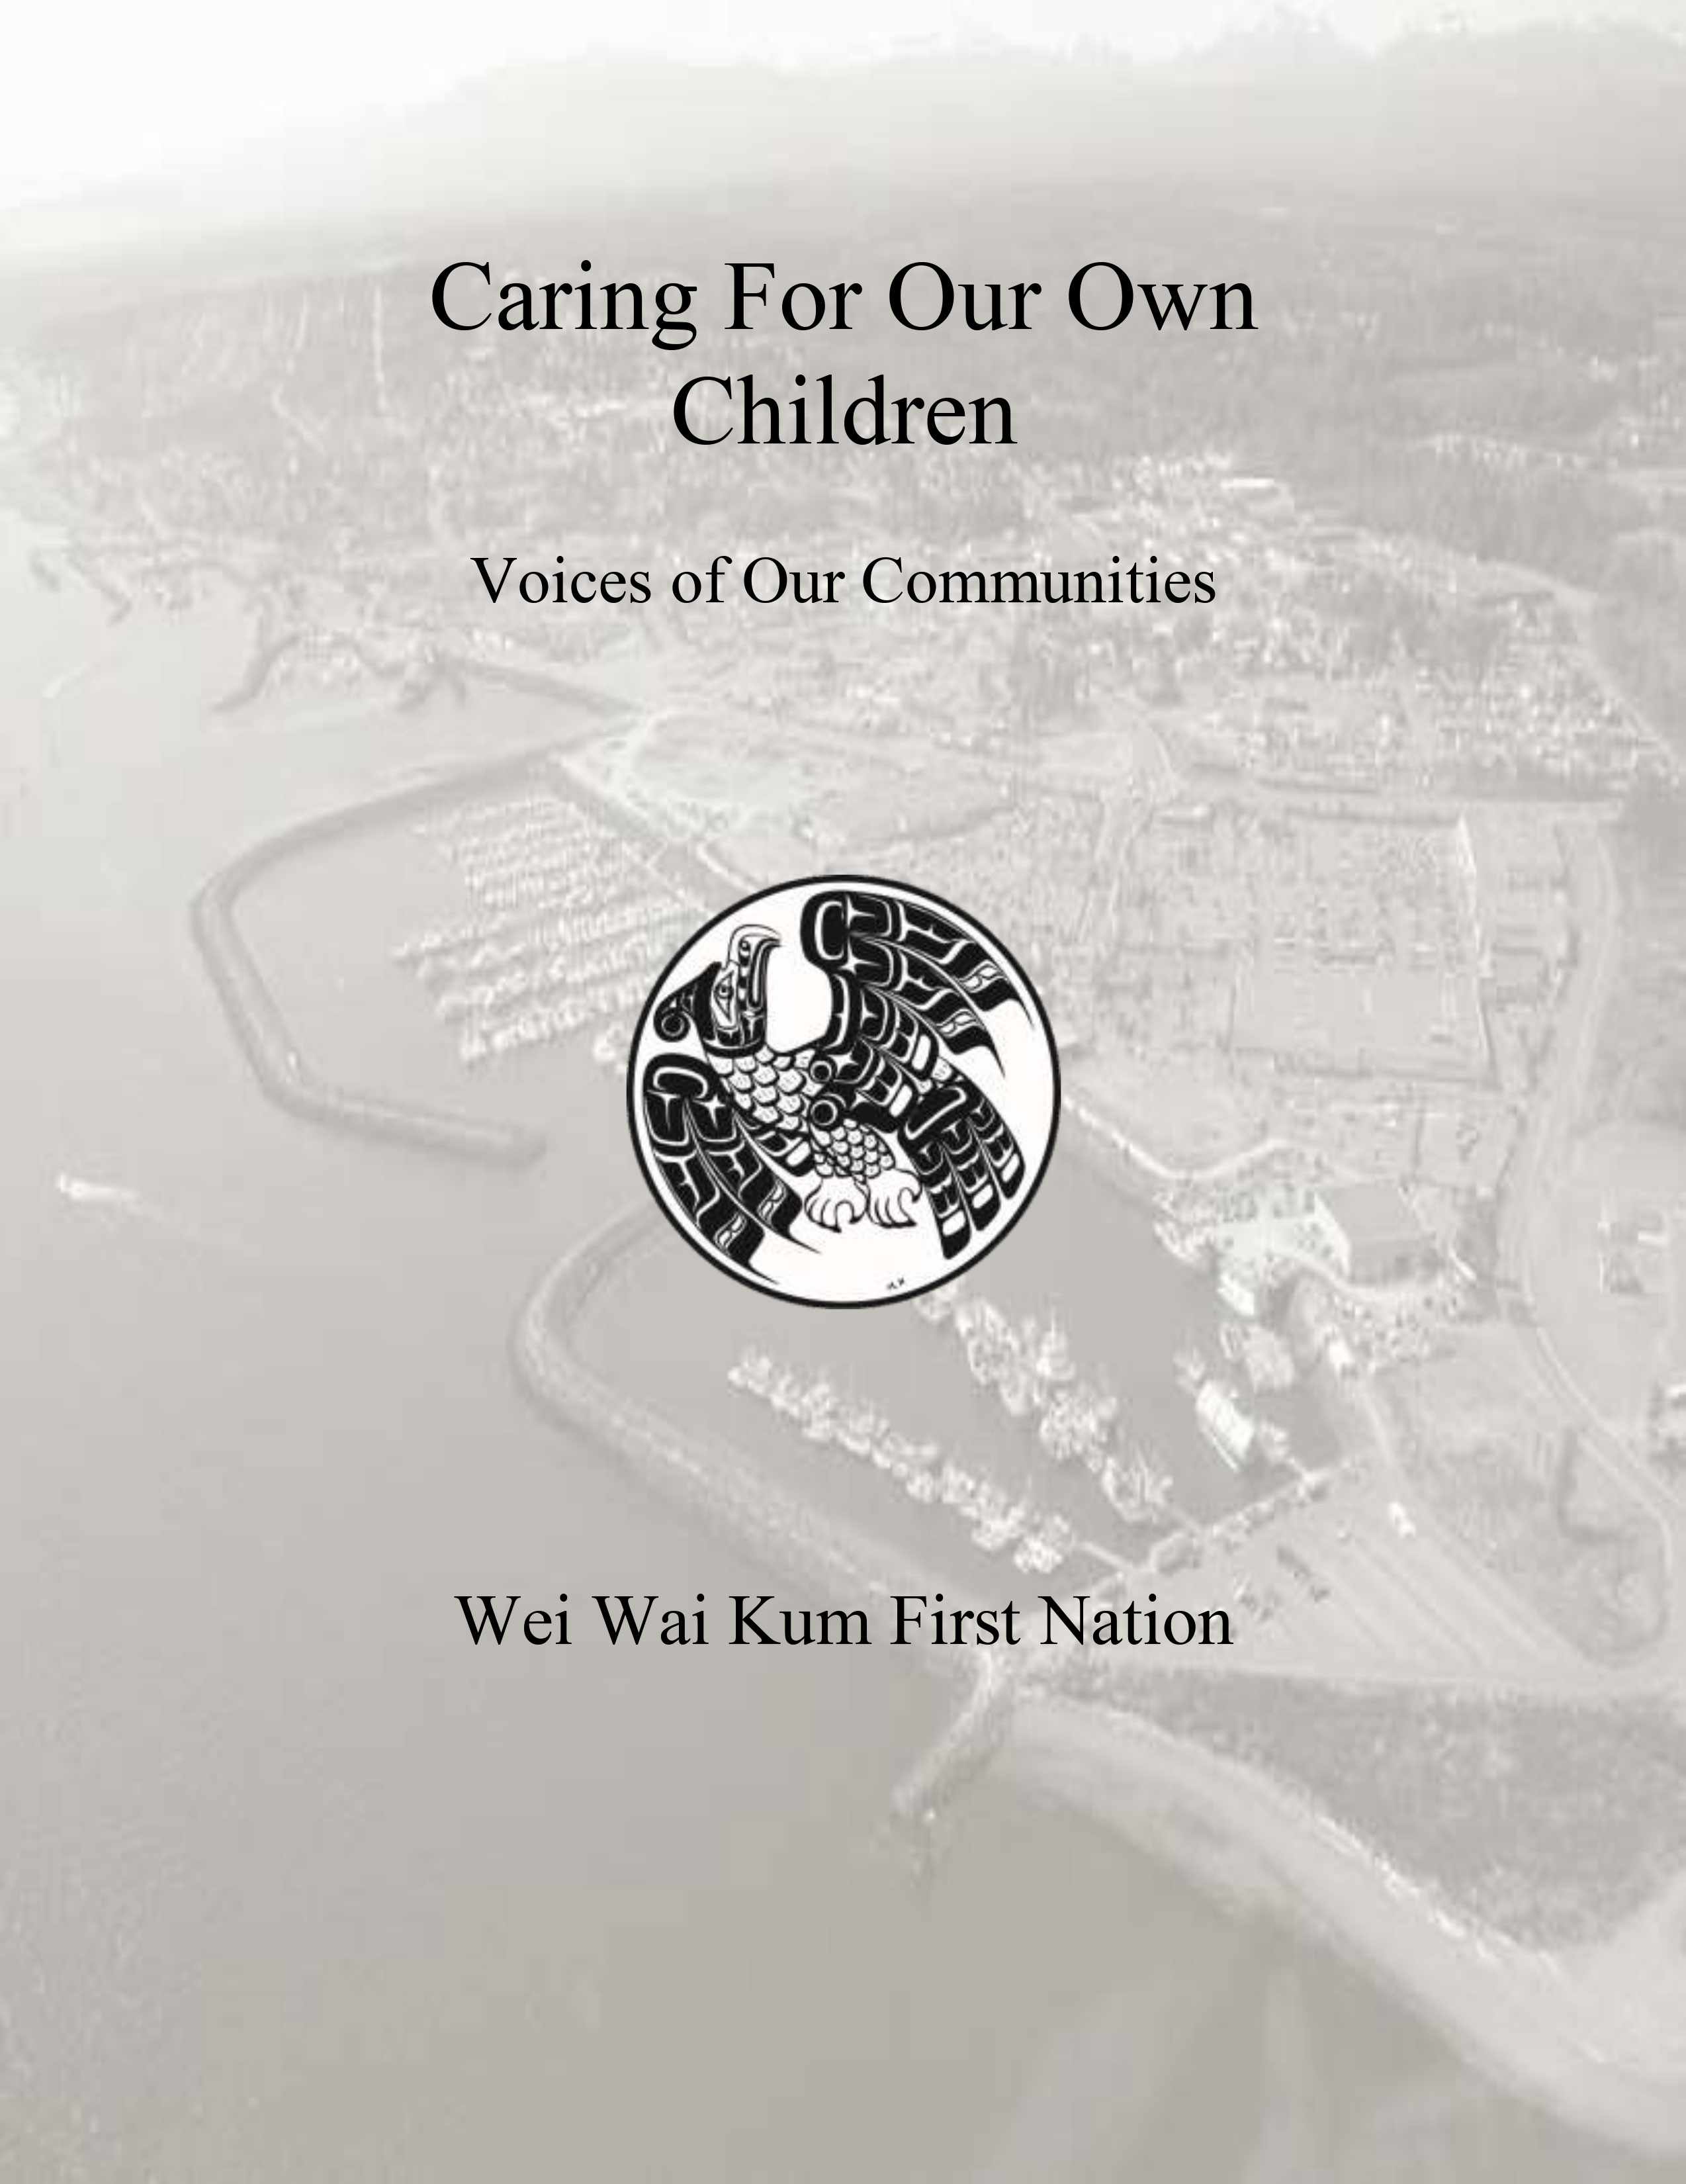 Wei Wai Kum First Nation - March 2013